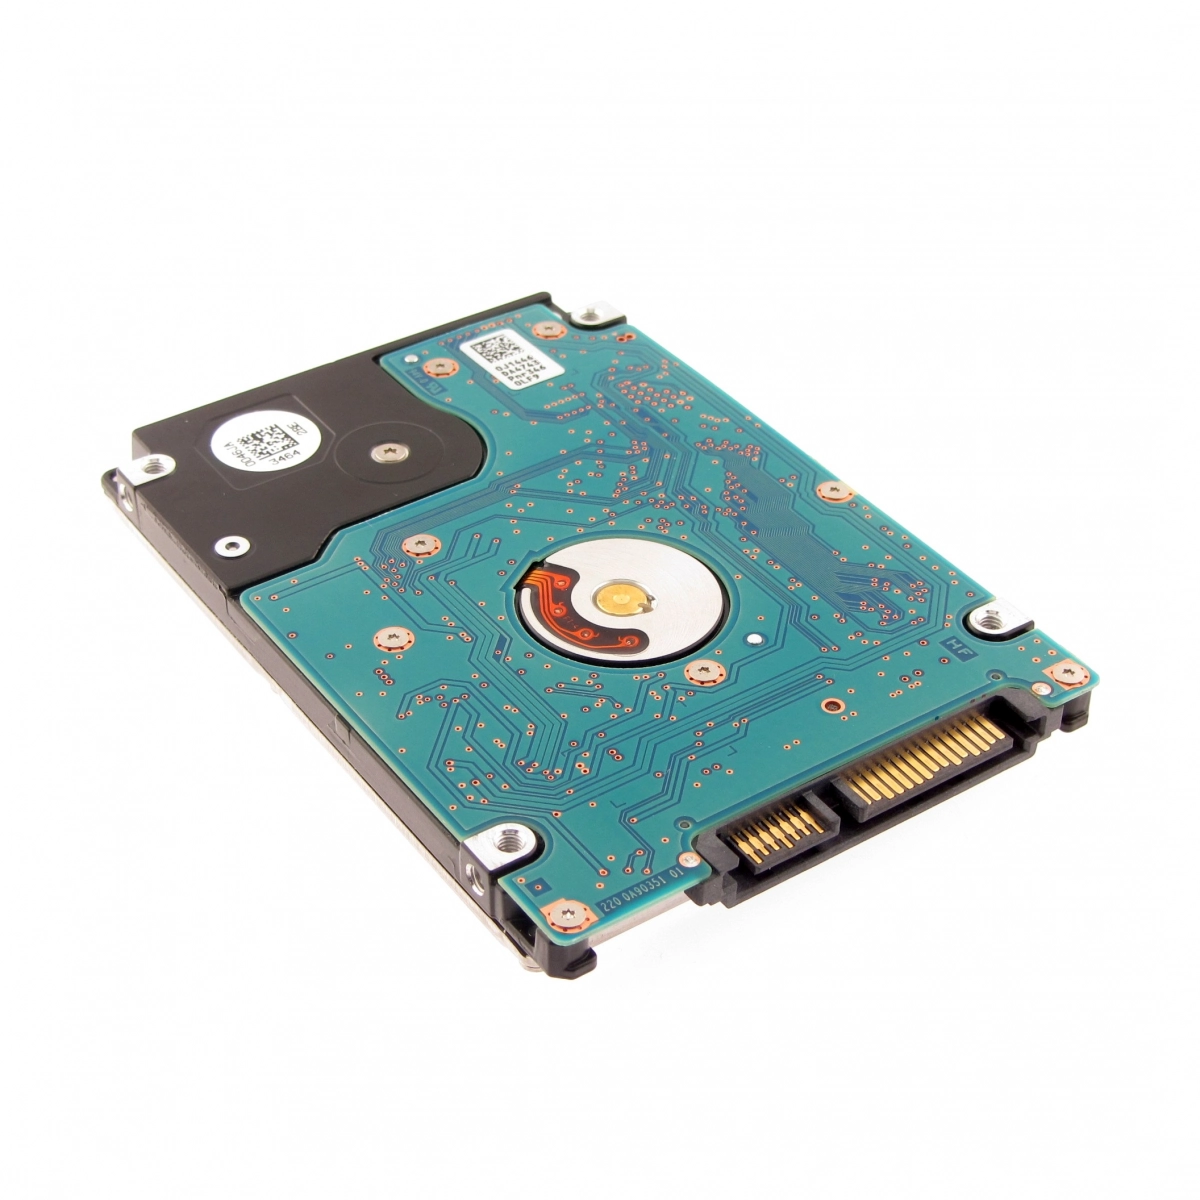 Notebook-Festplatte 1TB, 5400rpm, 128MB für LENOVO ThinkPad T440 (20B6)